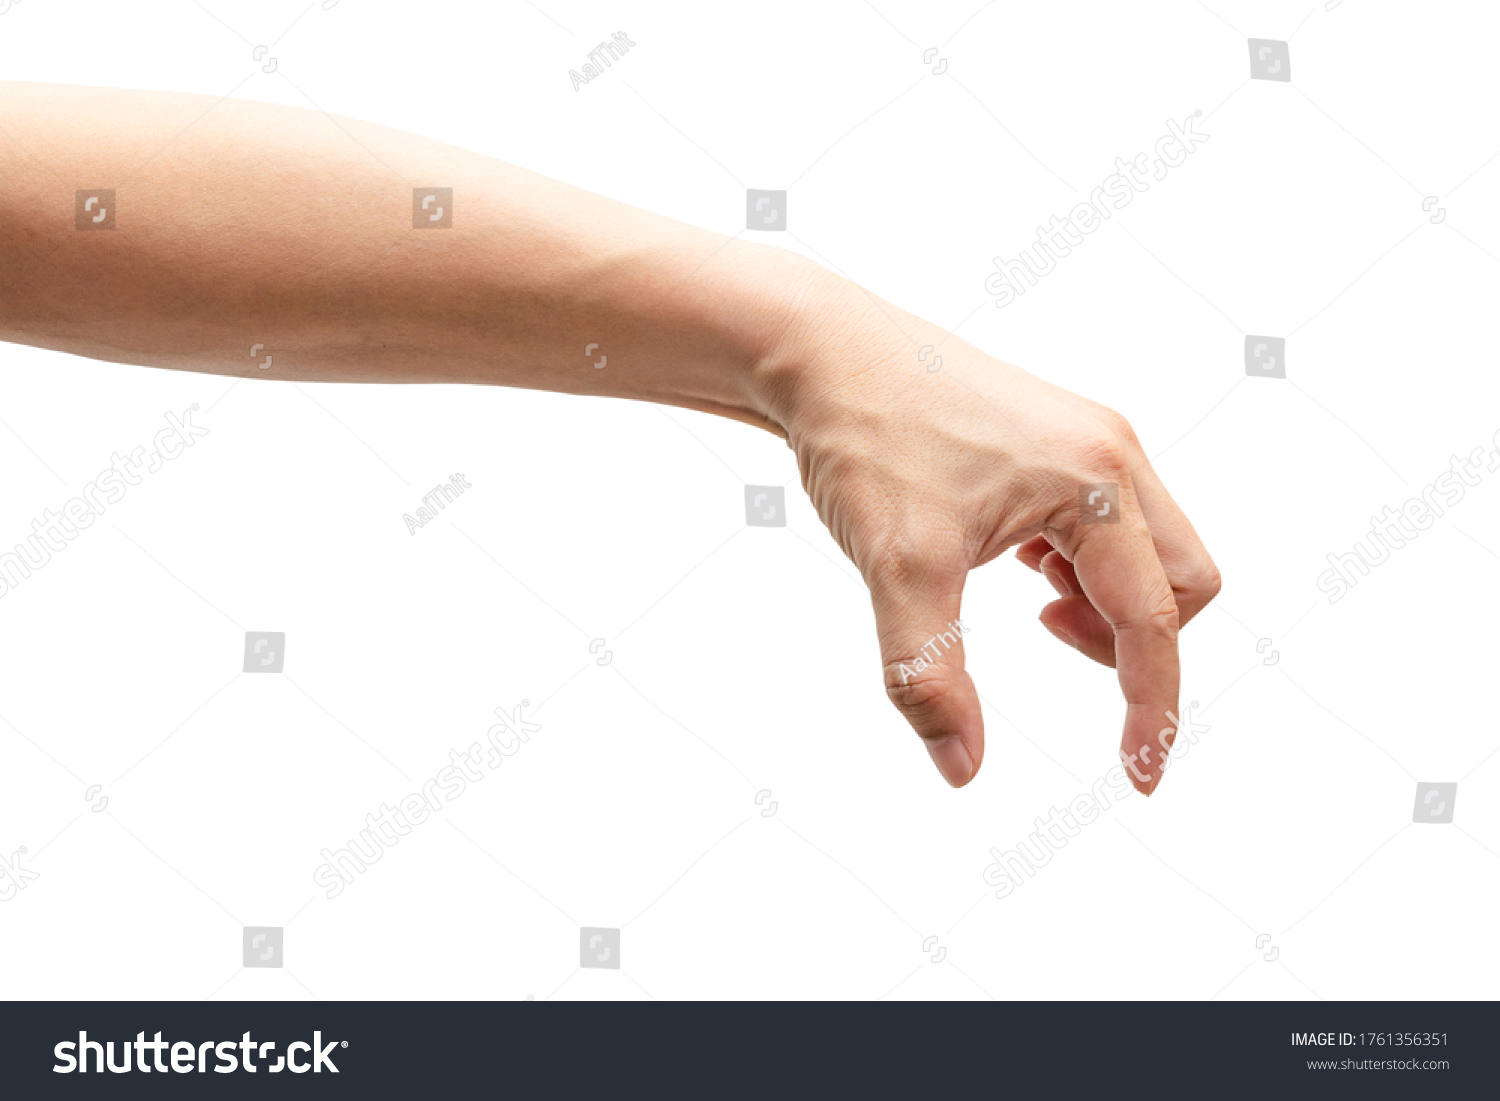 Male hand holding, picking up pose isolated on isolated on white background #1761356351